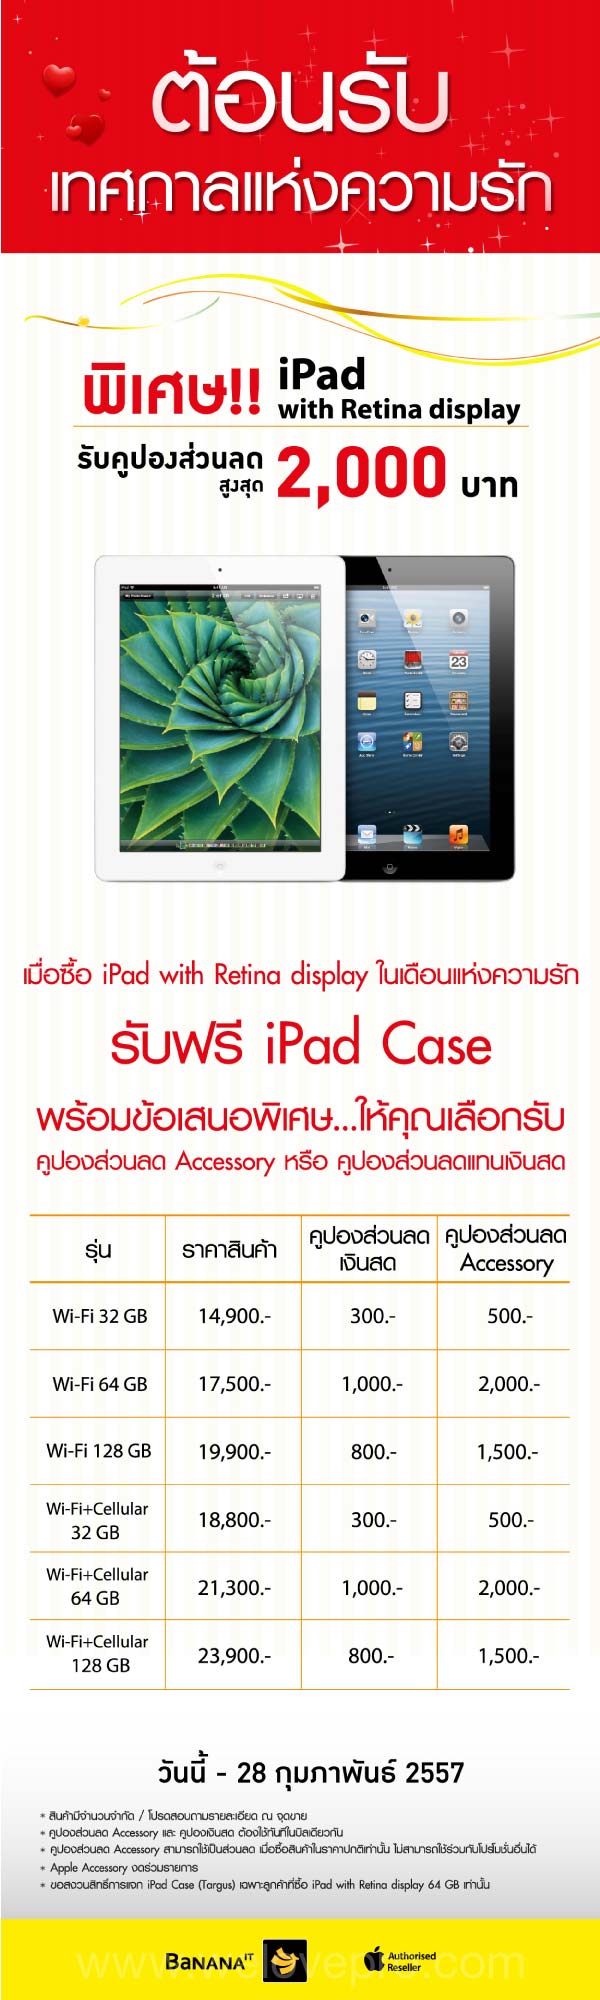 BaNANA IT ซื้อ iPad รับคูปองส่วนลดสูงสุด 2,000 บาท